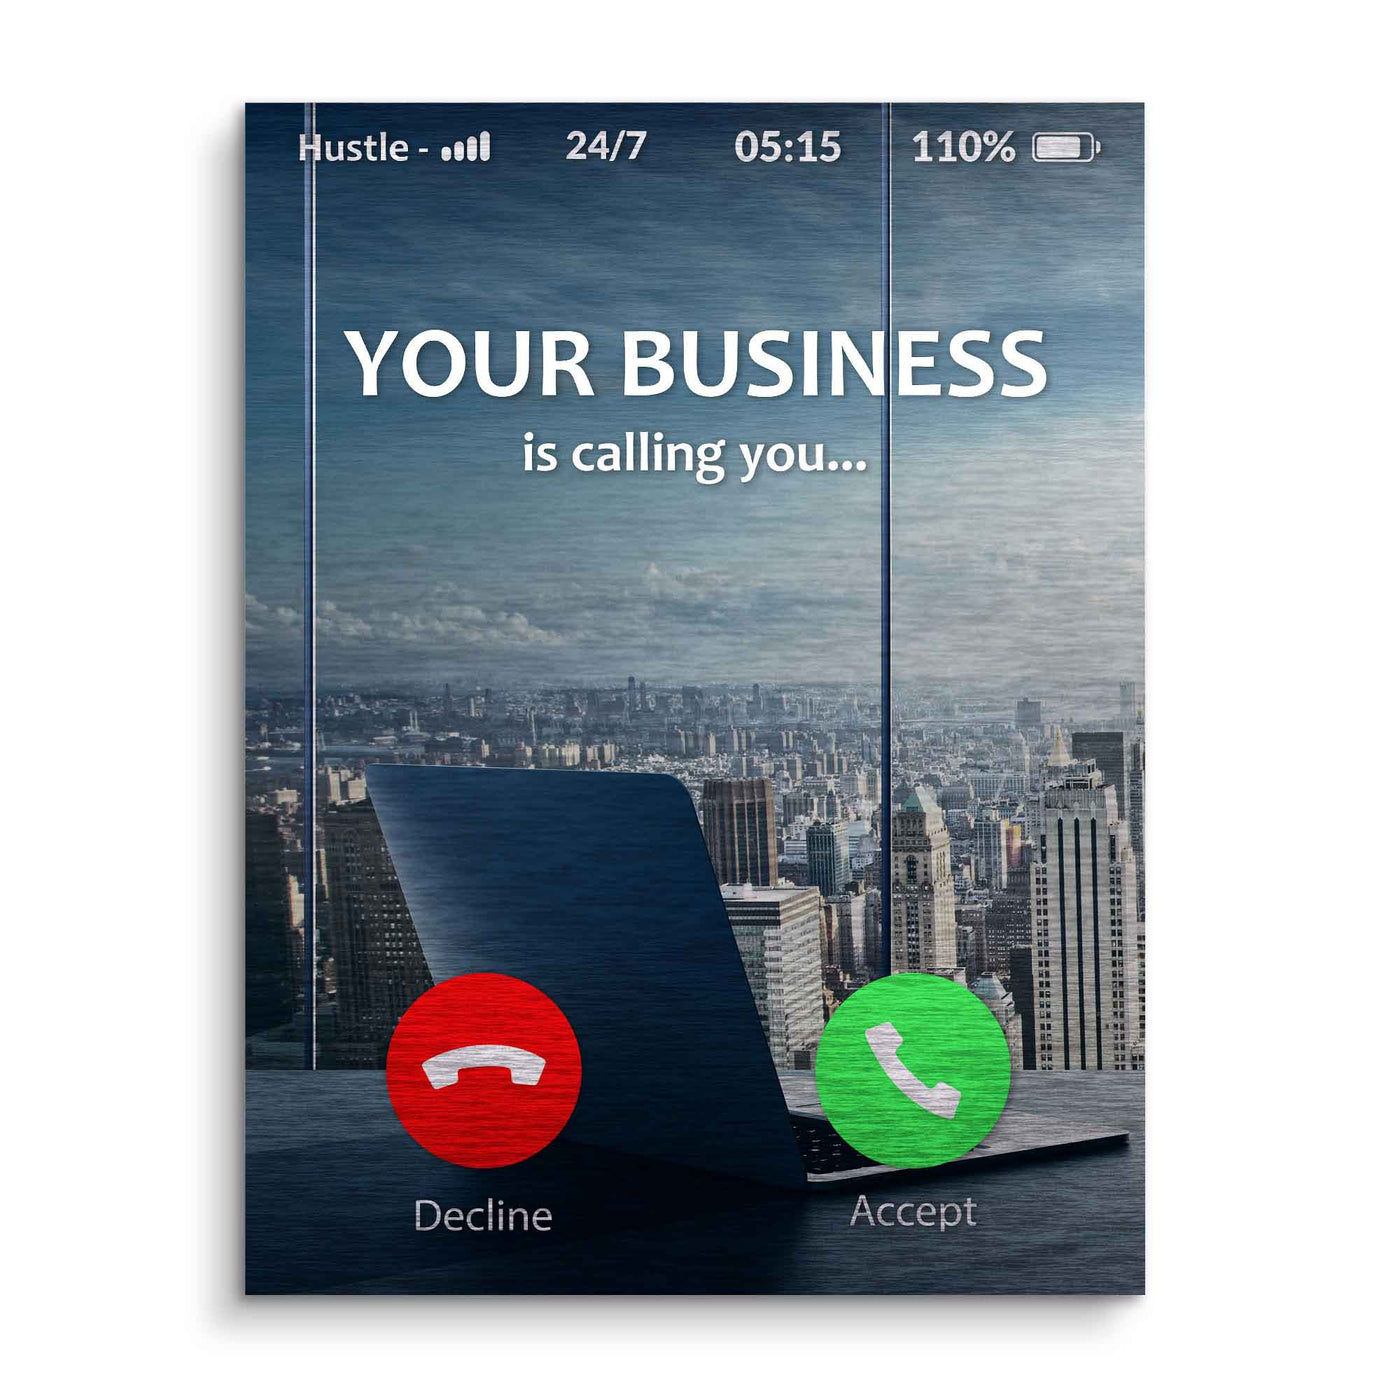 Business calls